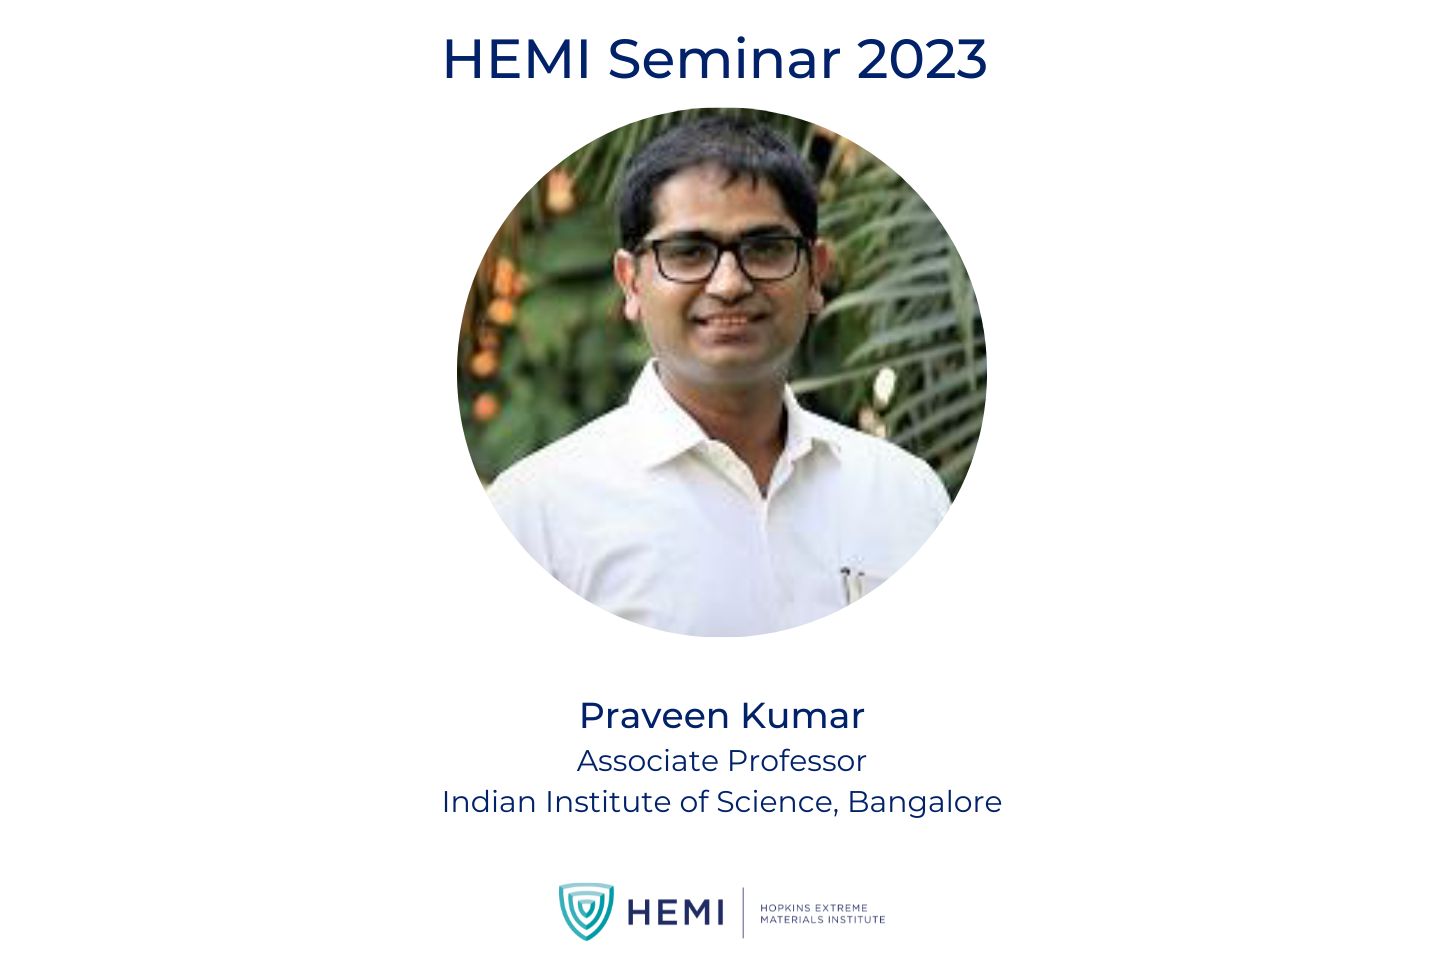 Headshot of Praveen Kumar and HEMI logo with text: "HEMI Seminar 2023. Praveen Kumar. Associate Professor. Indian Institute of Science, Bangalore."